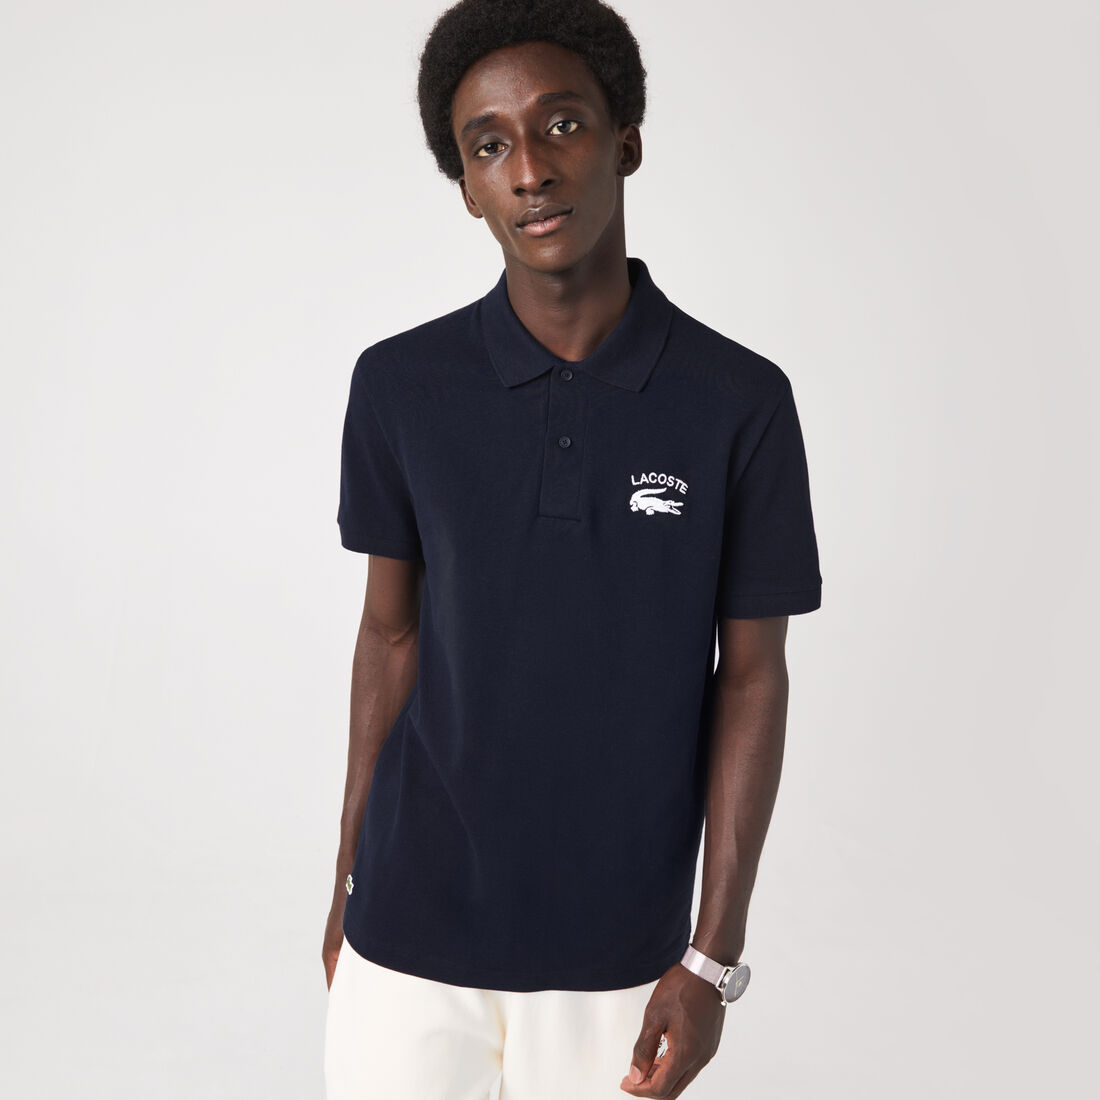 Lacoste Branded Stretch Mini Piqué Polo Shirts Herren Navy Blau | AHRX-46730